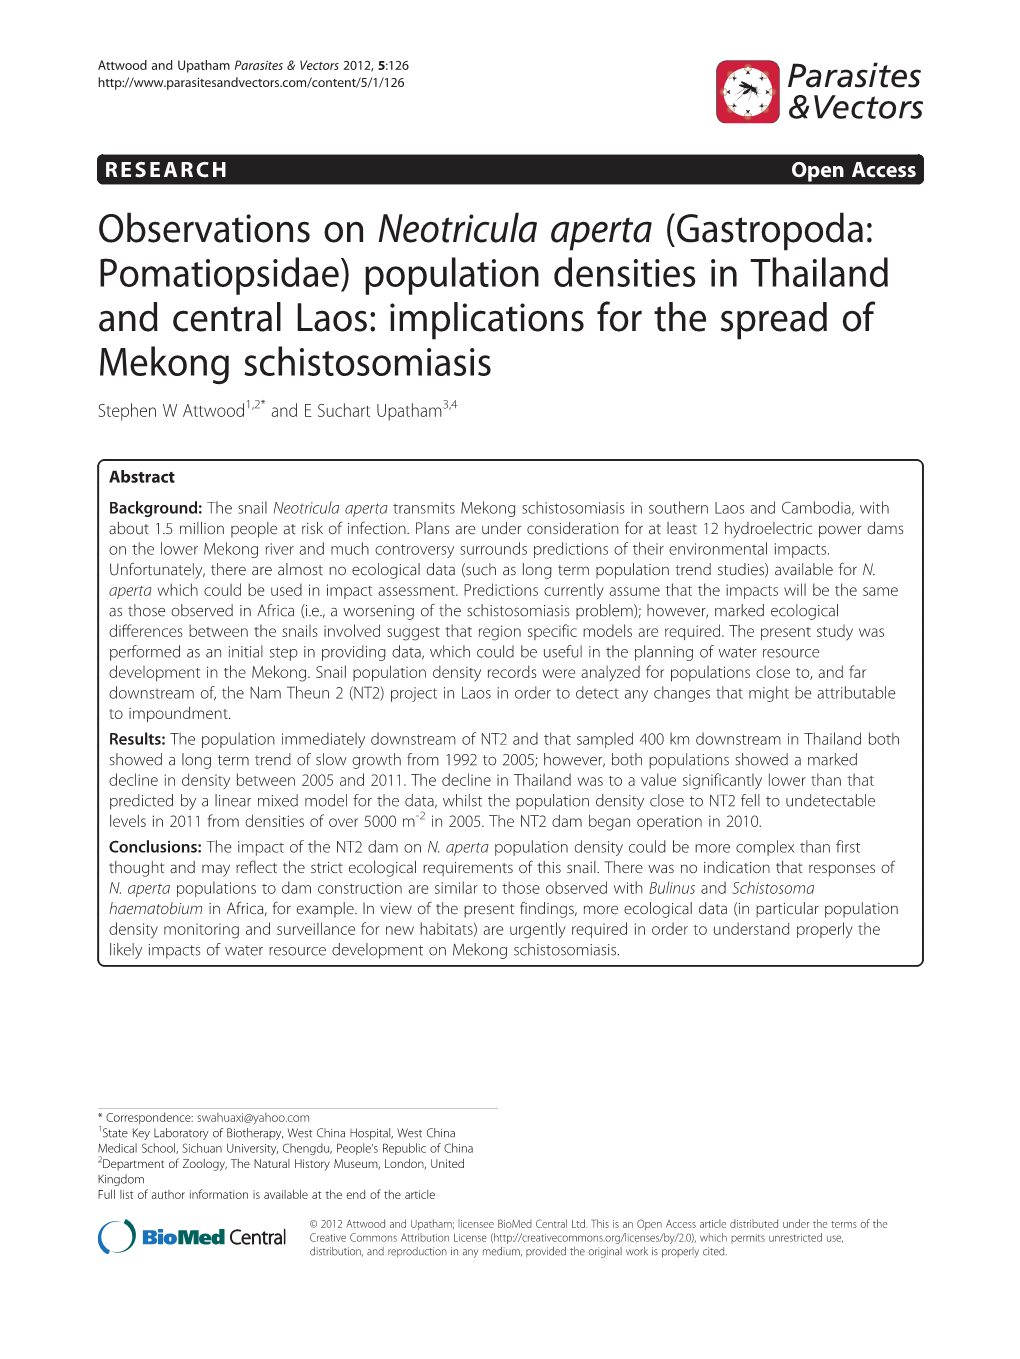 Observations on Neotricula Aperta (Gastropoda: Pomatiopsidae